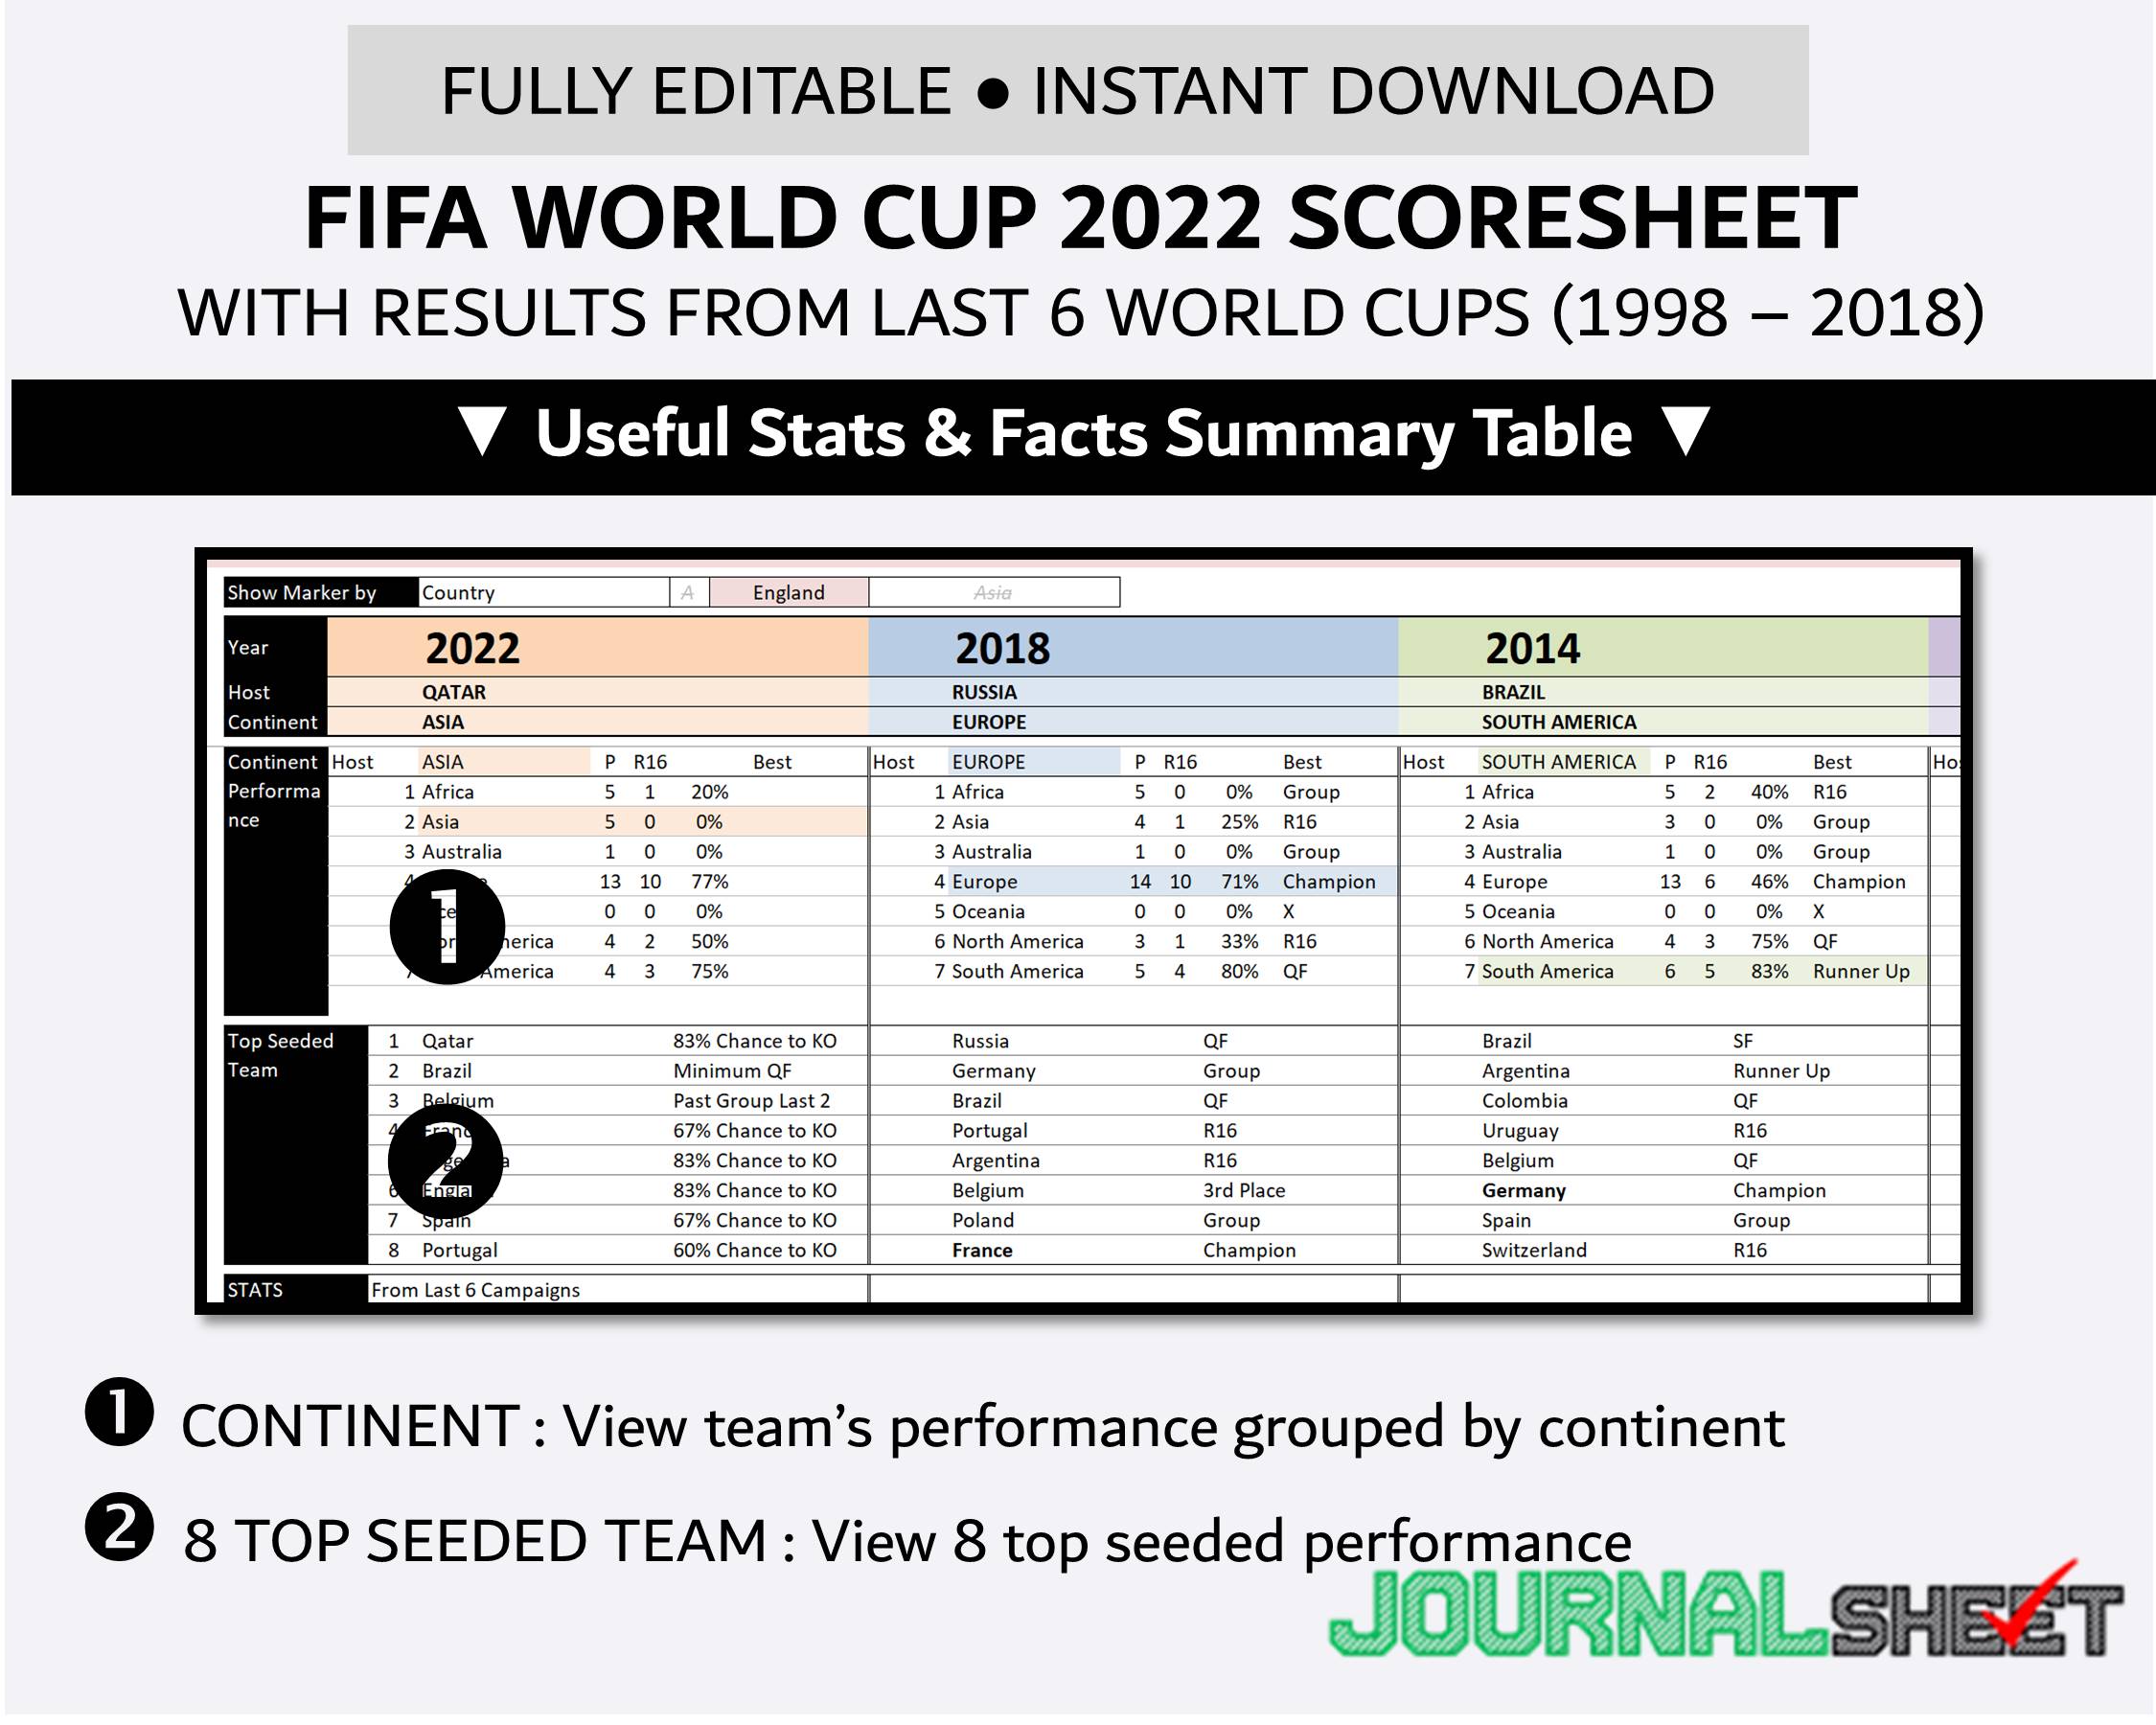 World Cup 2022 Top Seeded Teams